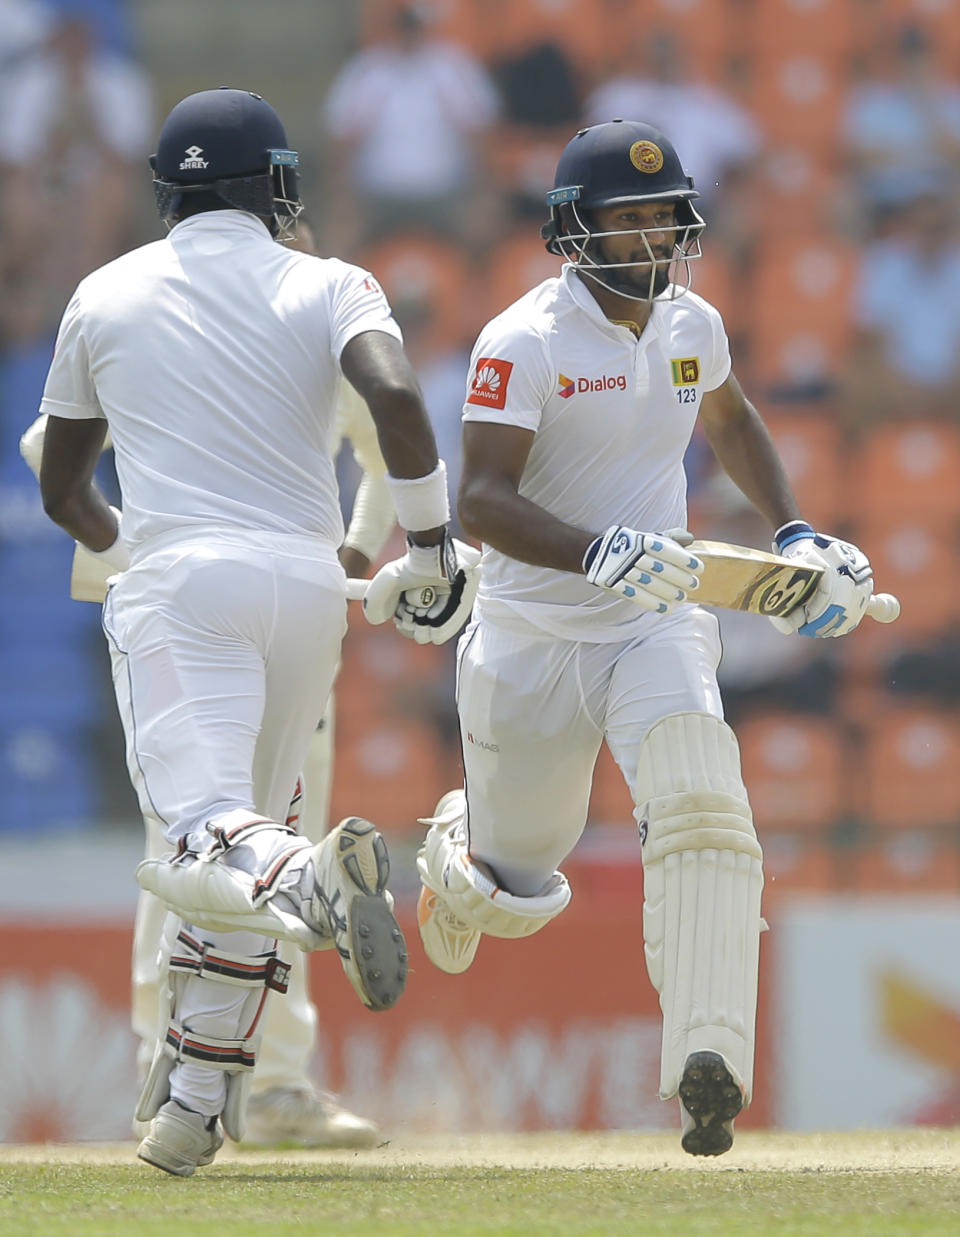 Sri Lanka's Dimuth Karunaratne, right, and Angelo Mathews run between wickets during the fourth day of the second test cricket match between Sri Lanka and England in Pallekele, Sri Lanka, Saturday, Nov. 17, 2018. (AP Photo/Eranga Jayawardena)